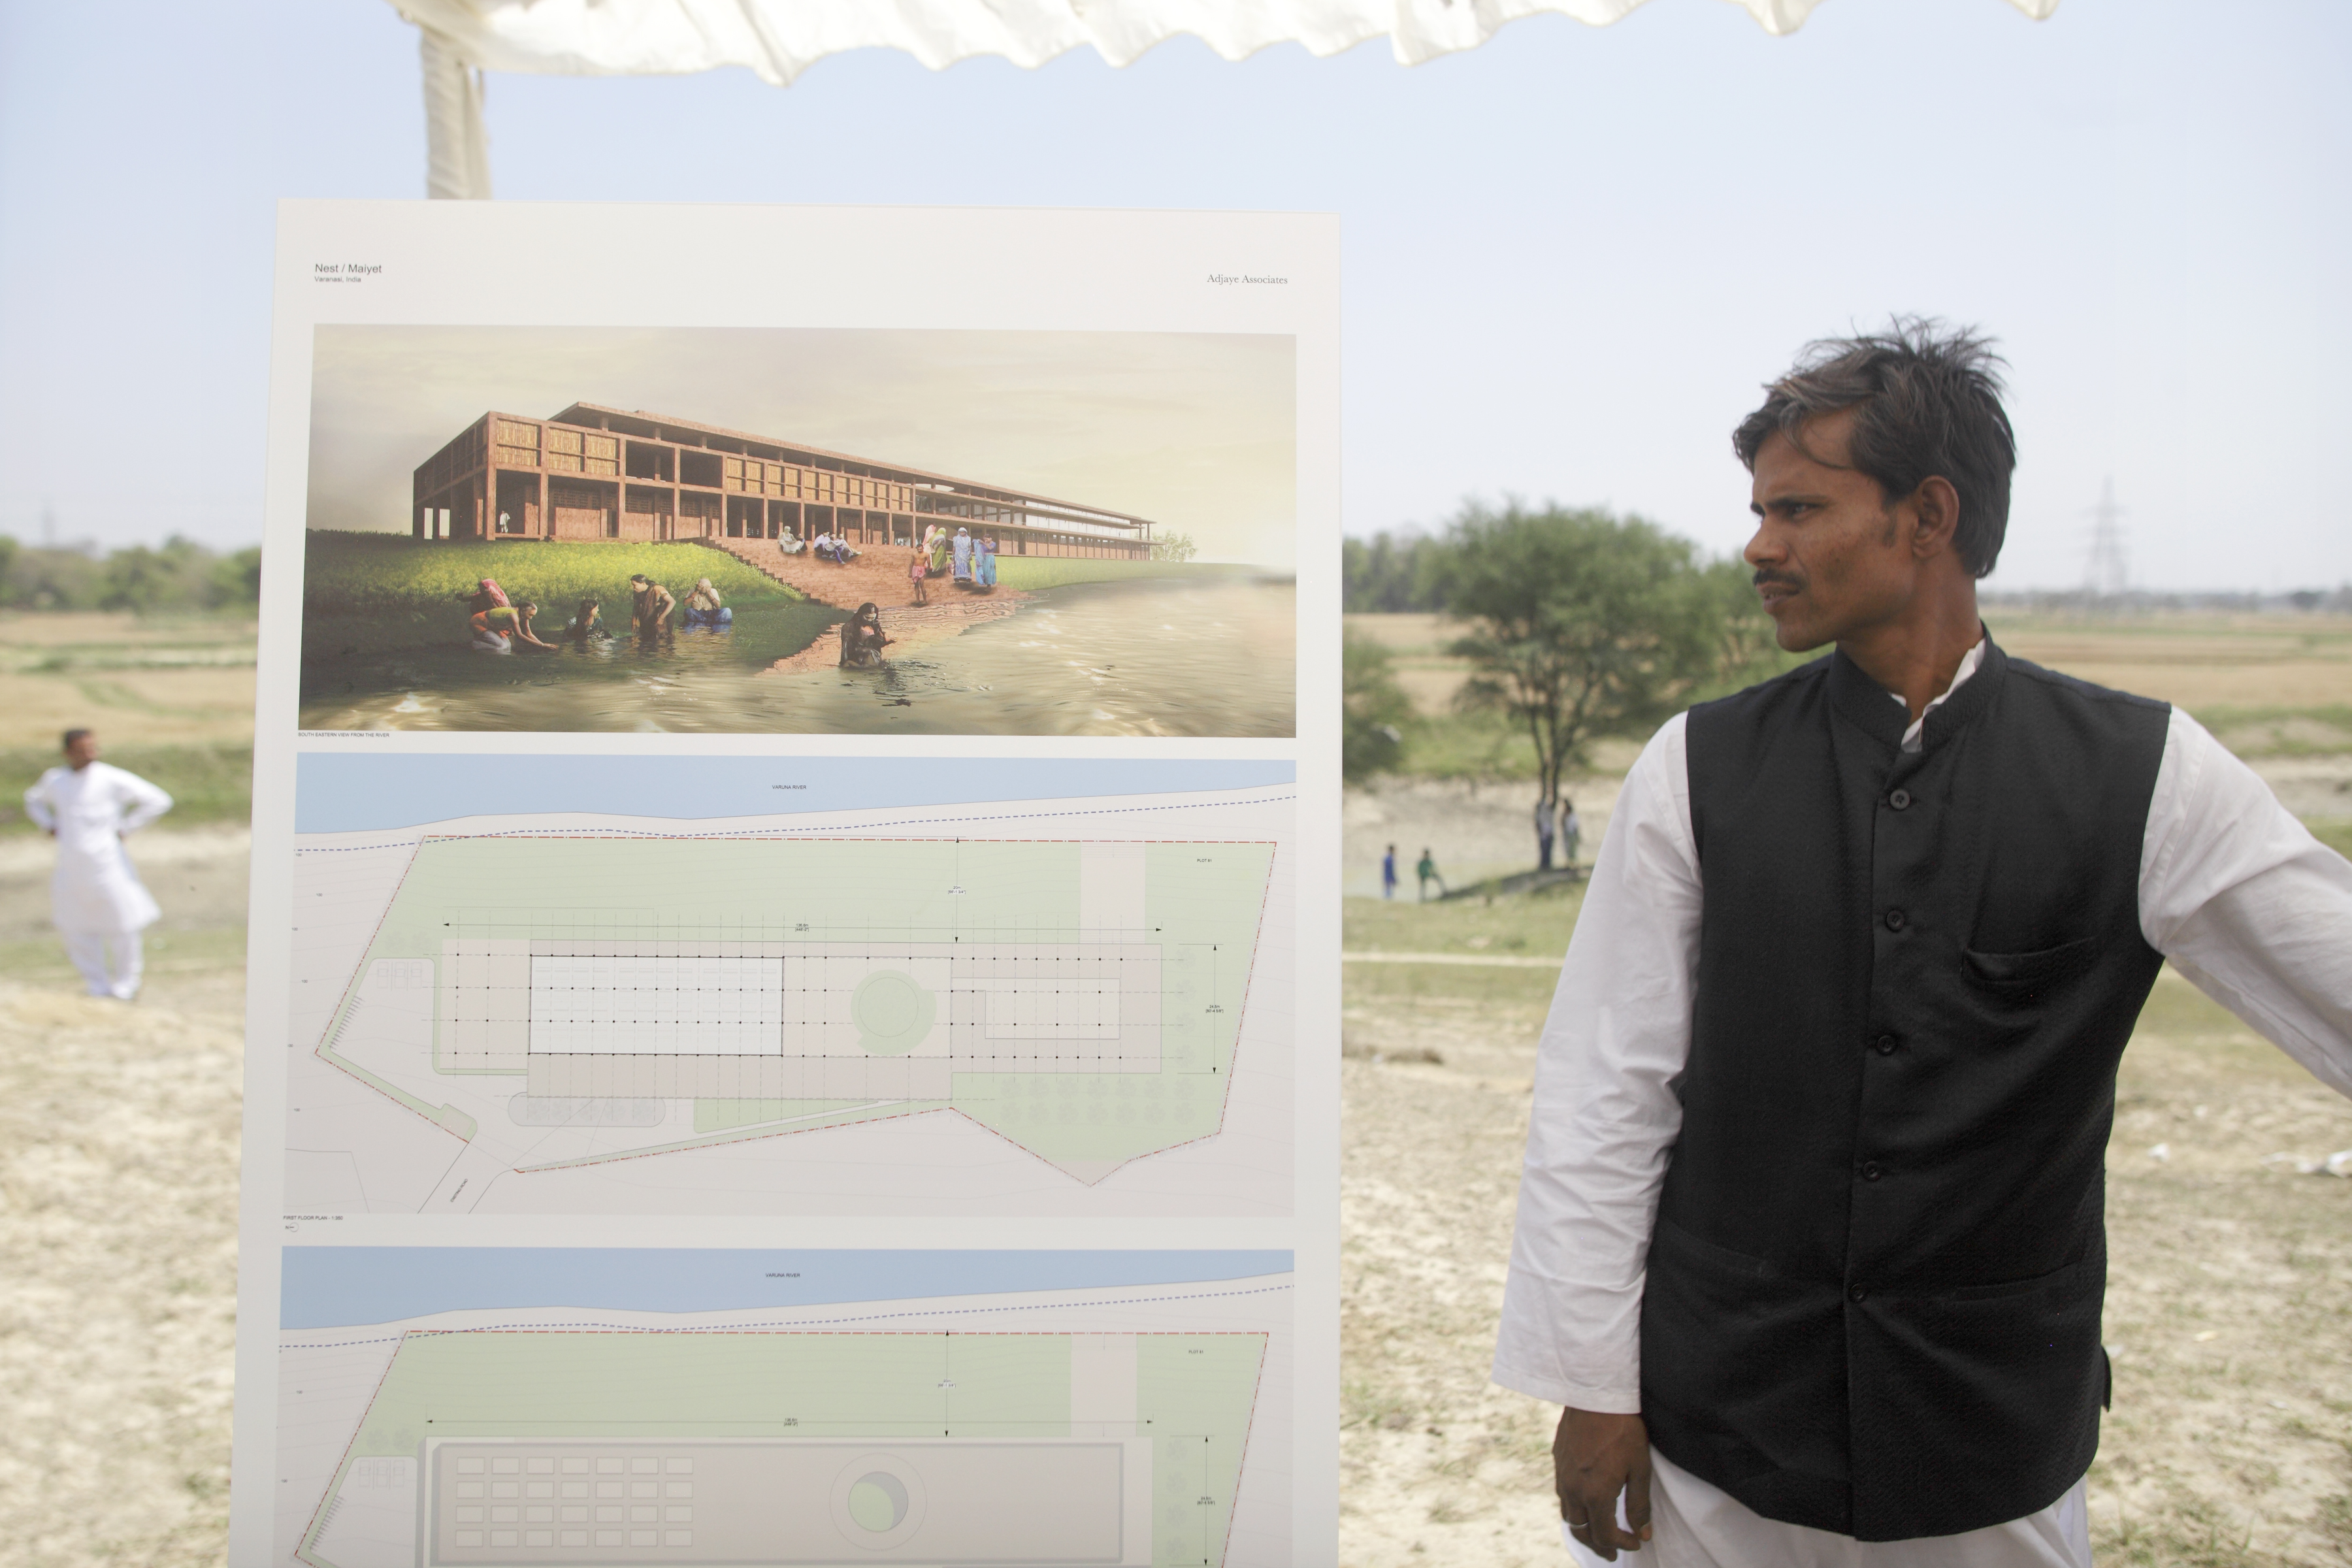 A Varanasi man checks the design proposed by David Adjaye. (Neil Davenport)